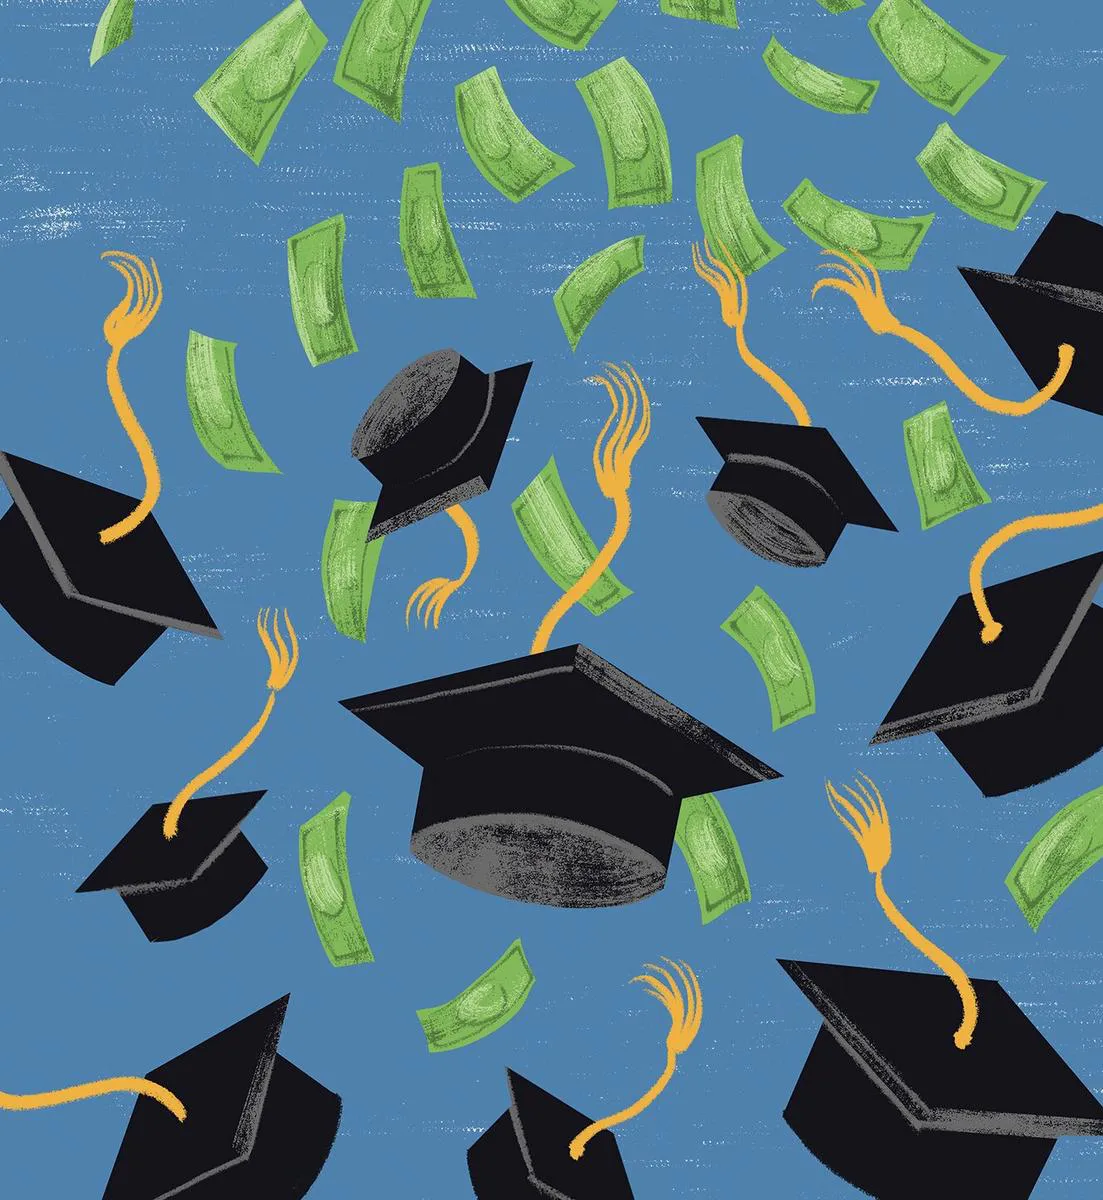  Saturday debate: Should governments cancel all student debt?  - News 24

